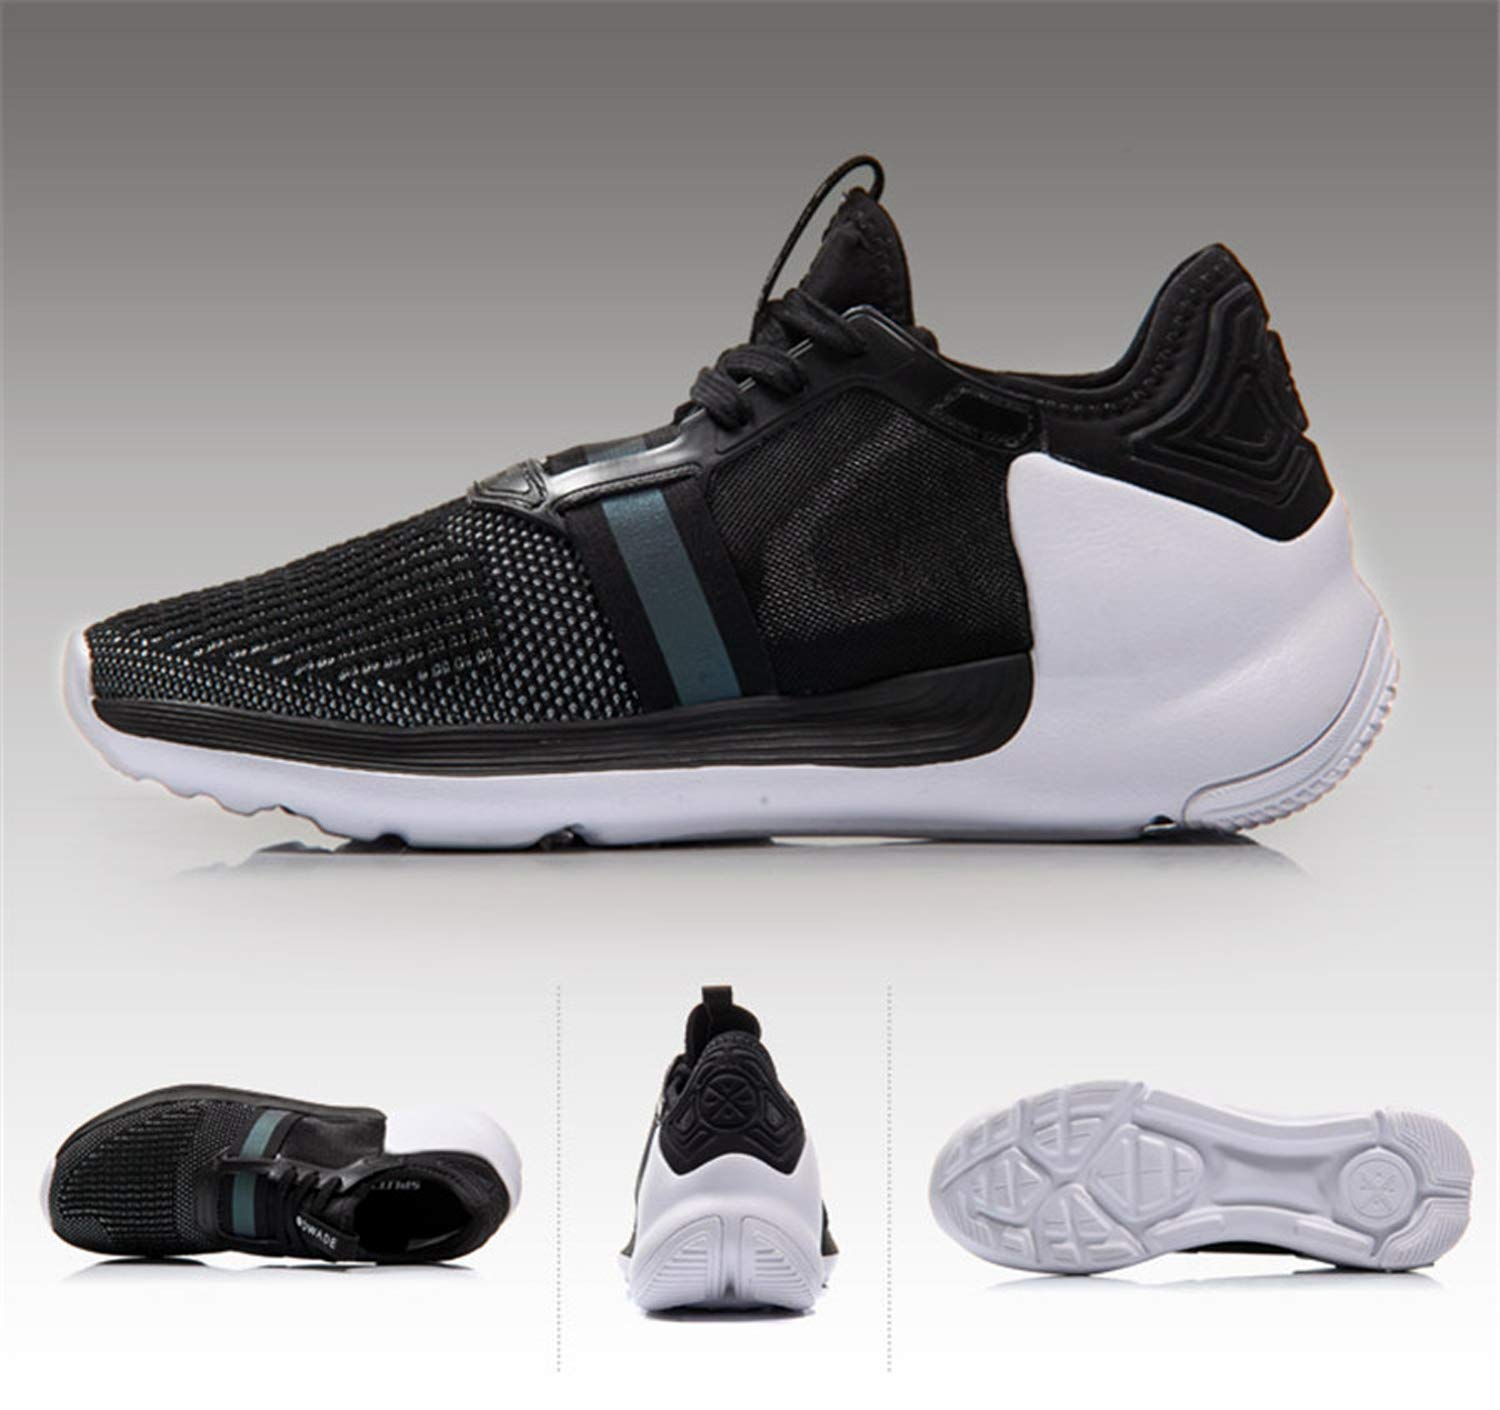 Li-Ning ABCM012-1 Female Basketball Shoes, Basic Black/Basic White - Best Price online Prokicksports.com